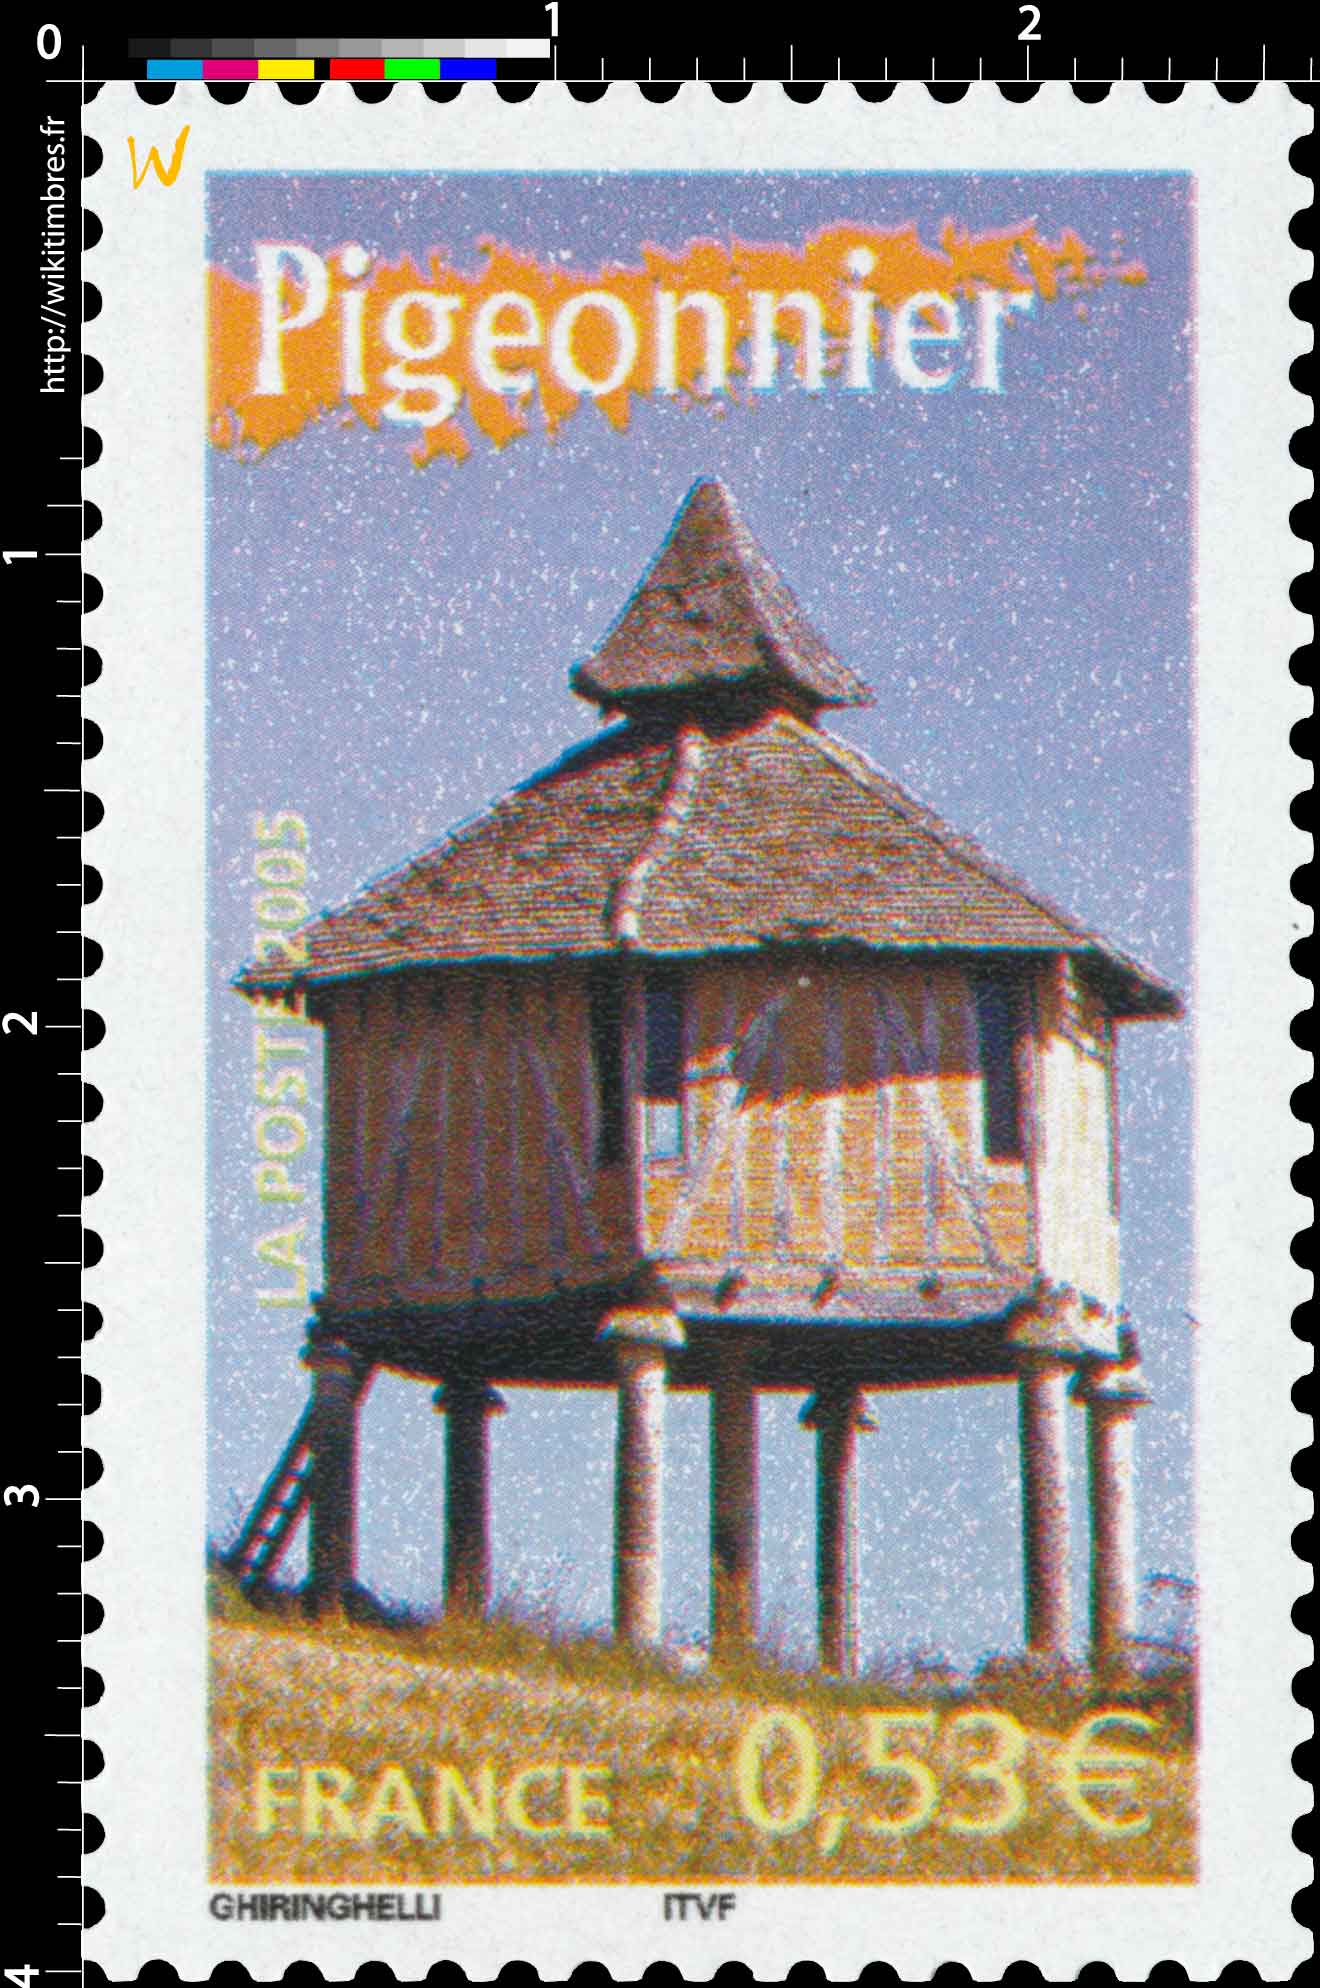 2005 Pigeonnier